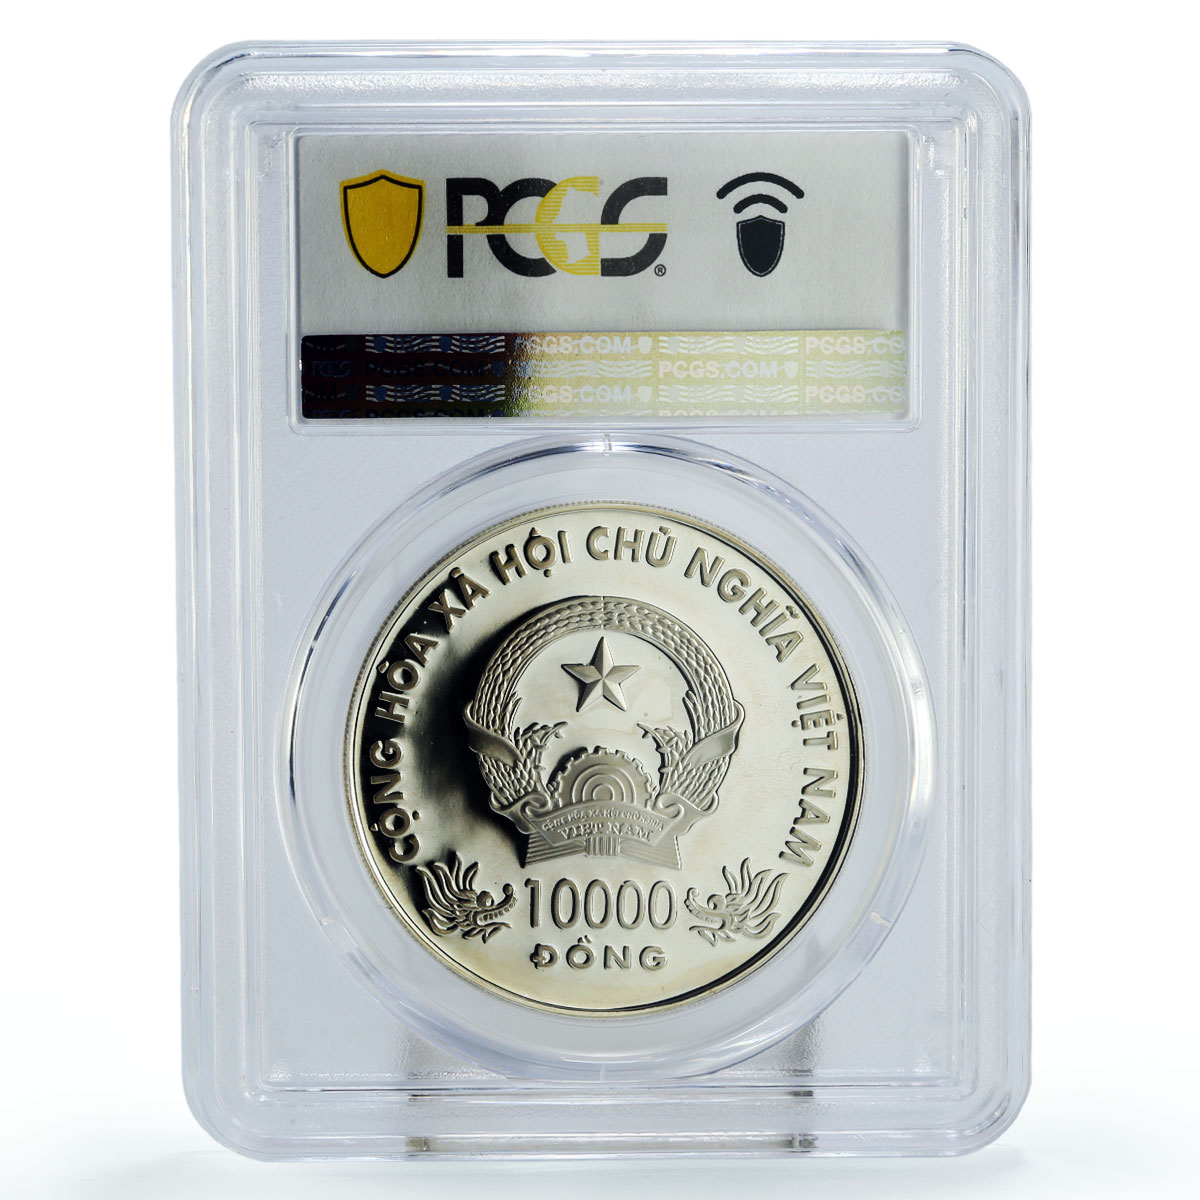 Vietnam 10000 dong Lunar Calendar Year of the Dragon PR67 PCGS silver coin 2000